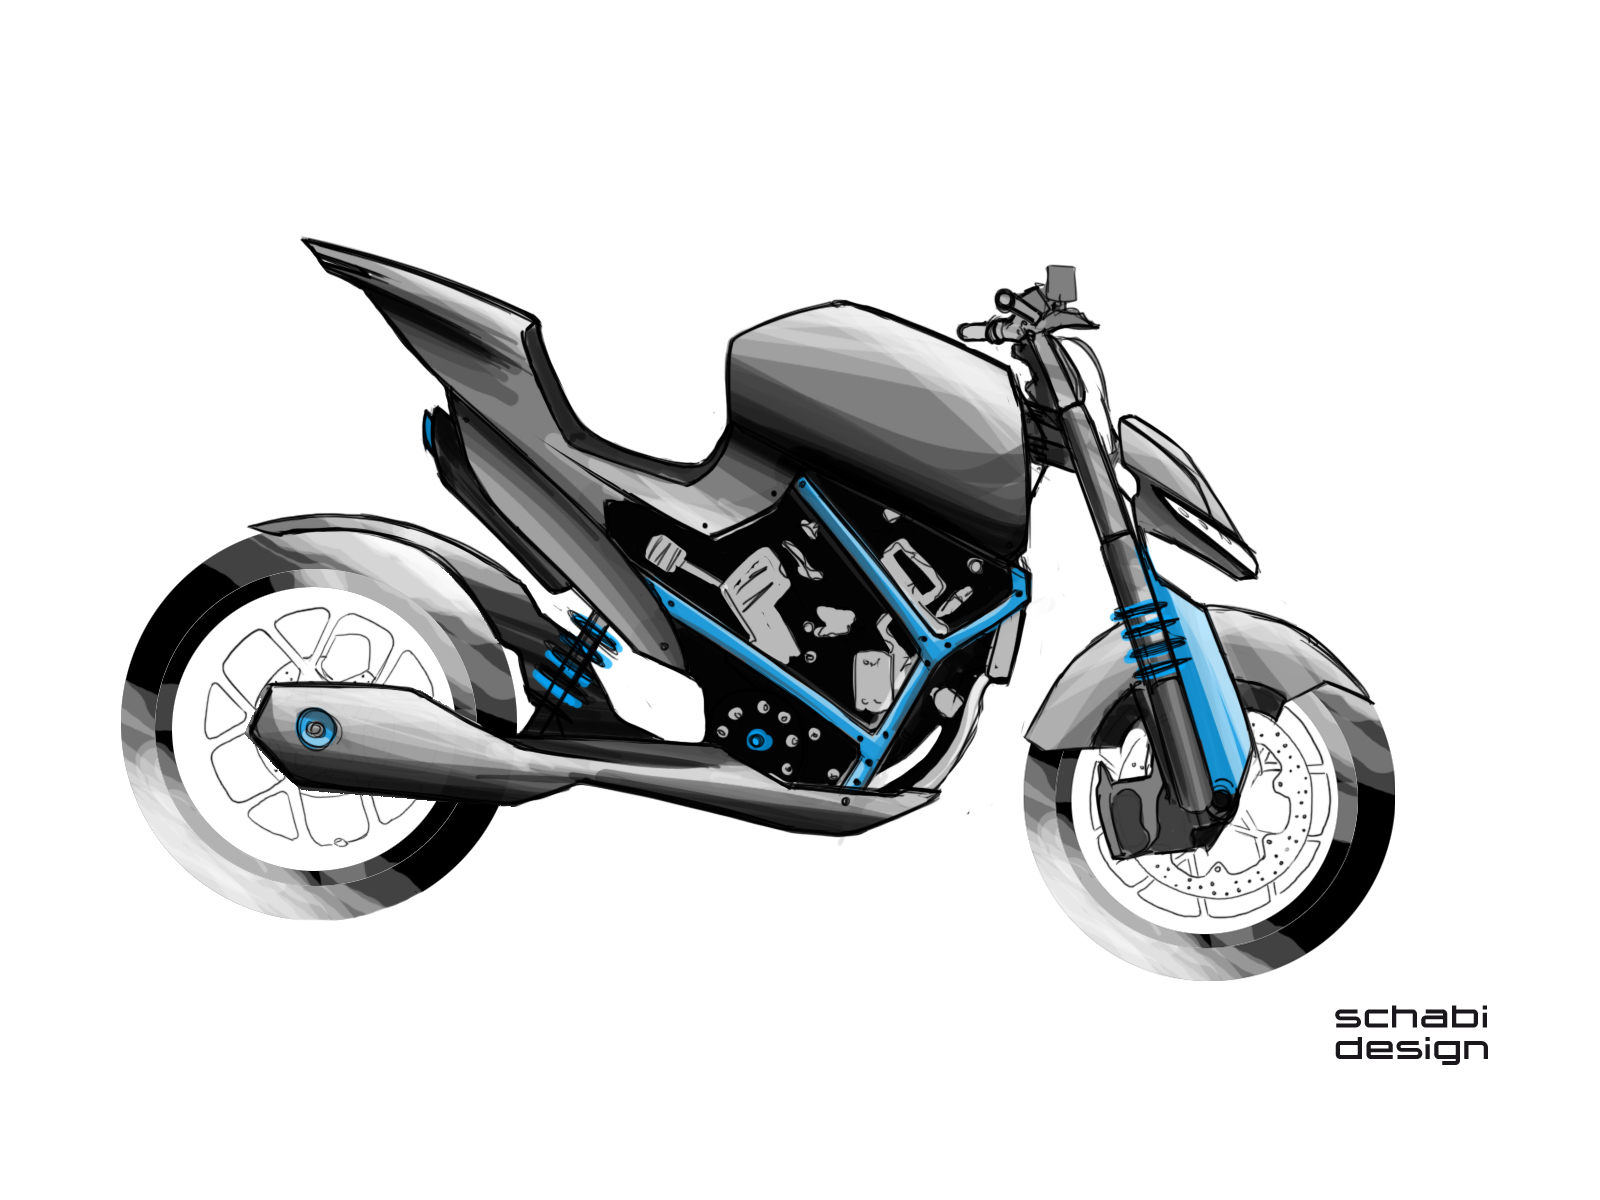 Schabi Design Sketch Site: Concept Bike Design